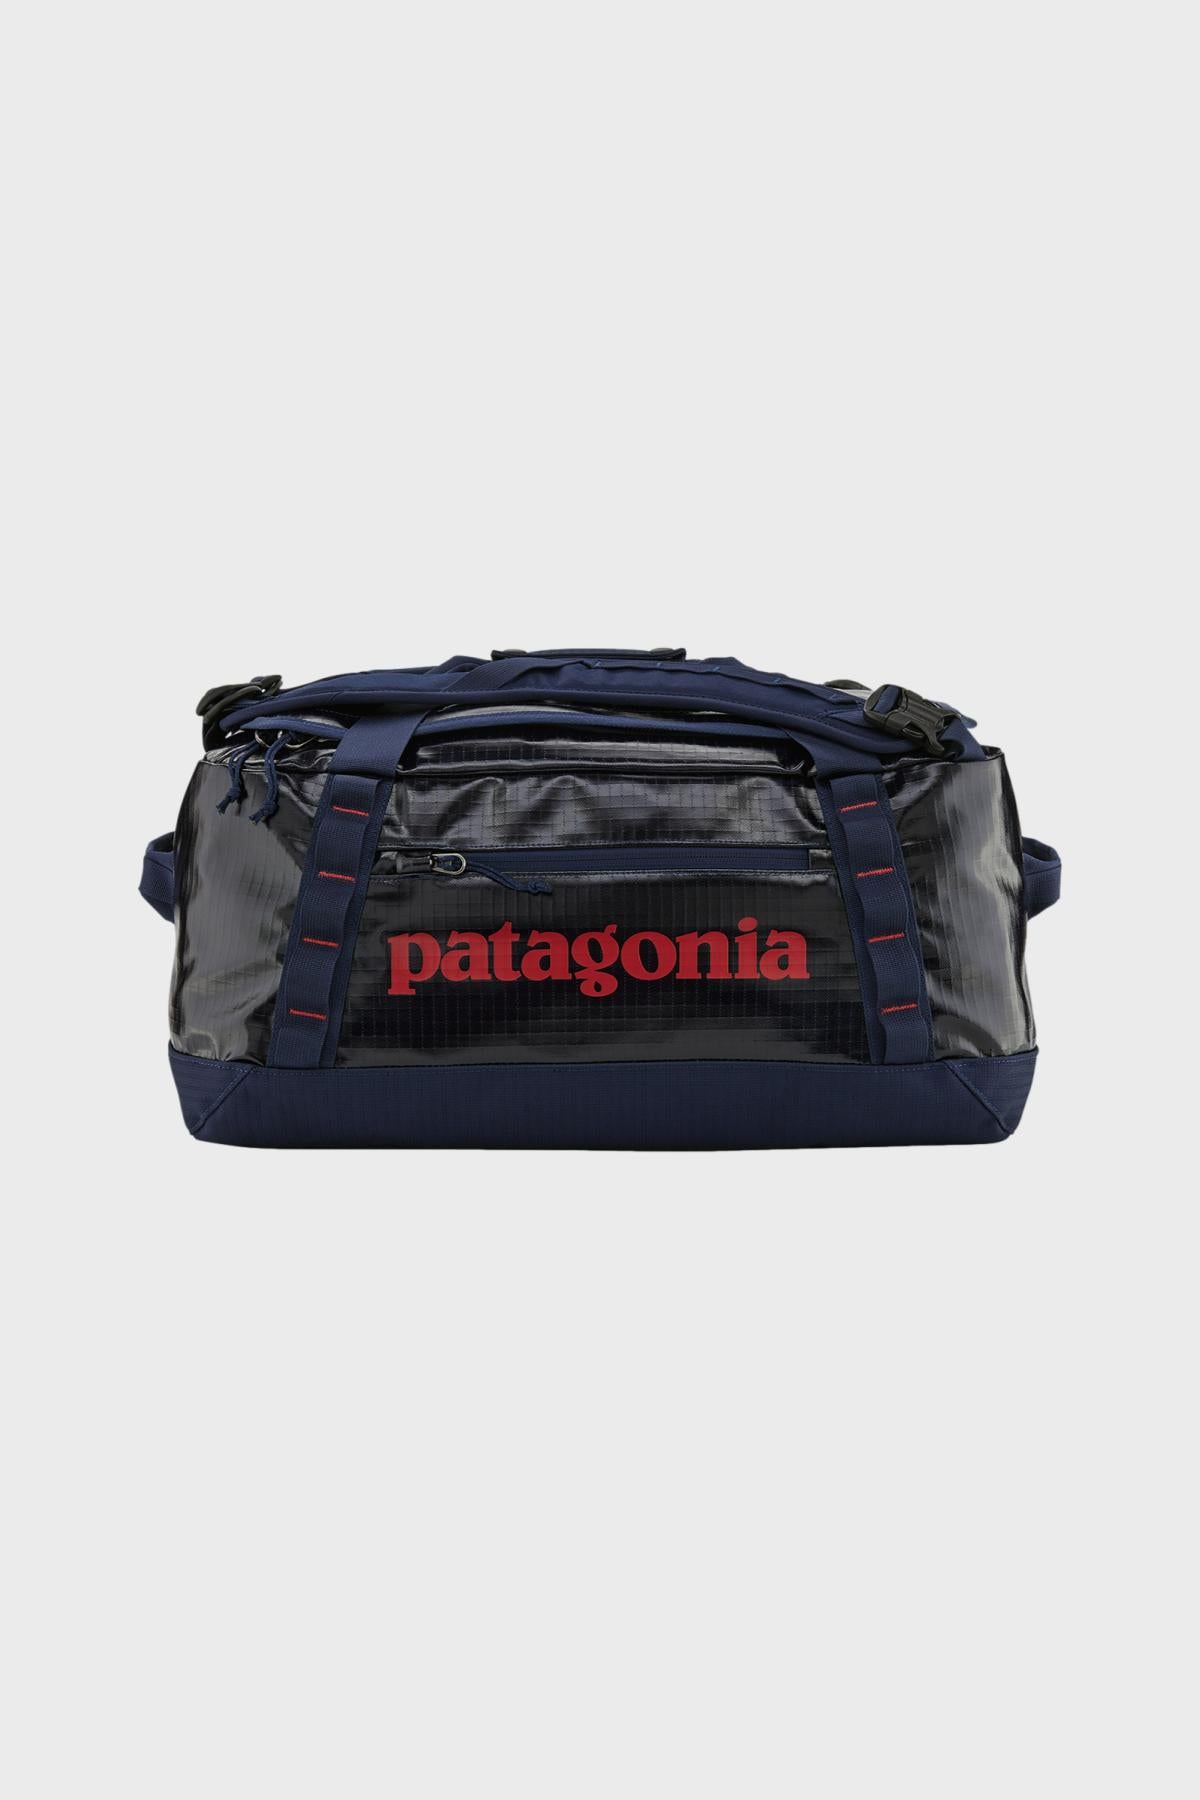 Patagonia - Black Hole Duffel Bag 55L